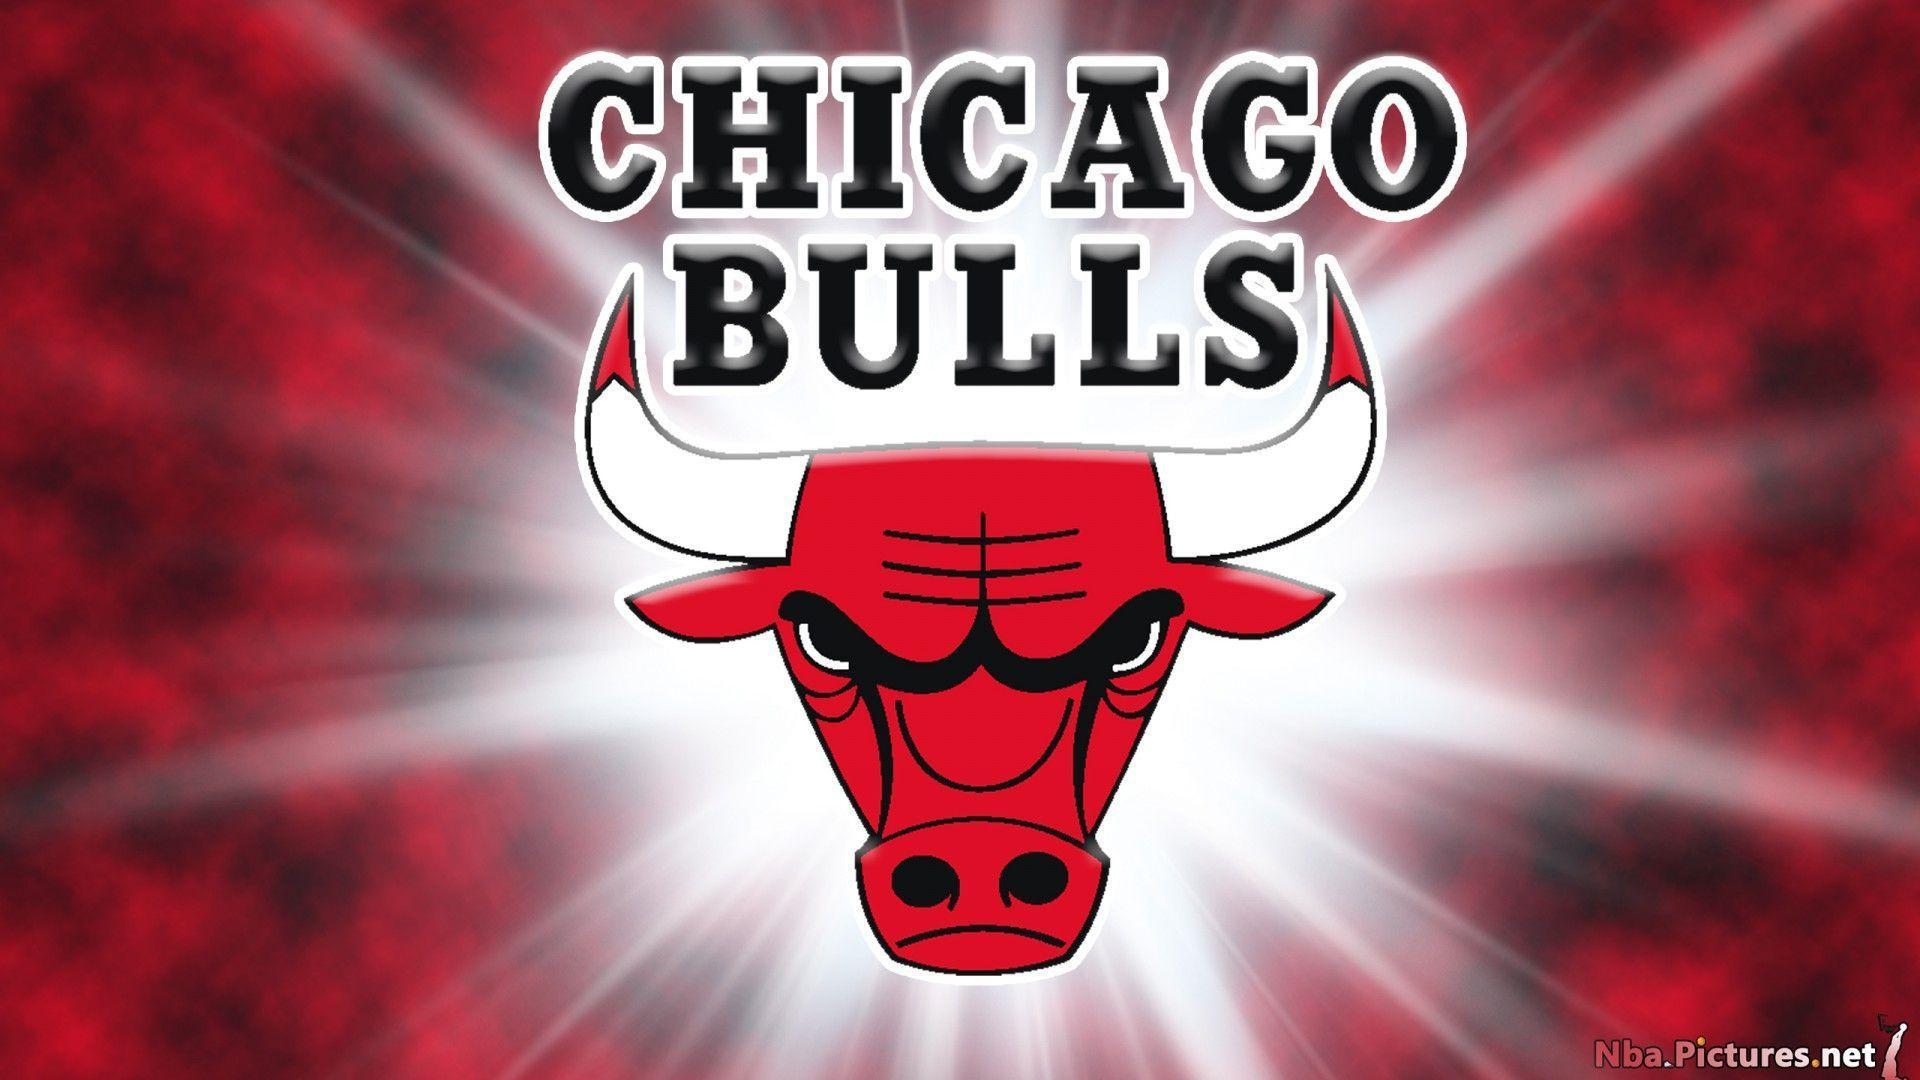 Chicago Bulls Logo 85 99256 Image HD Wallpaper. Wallfoy.com